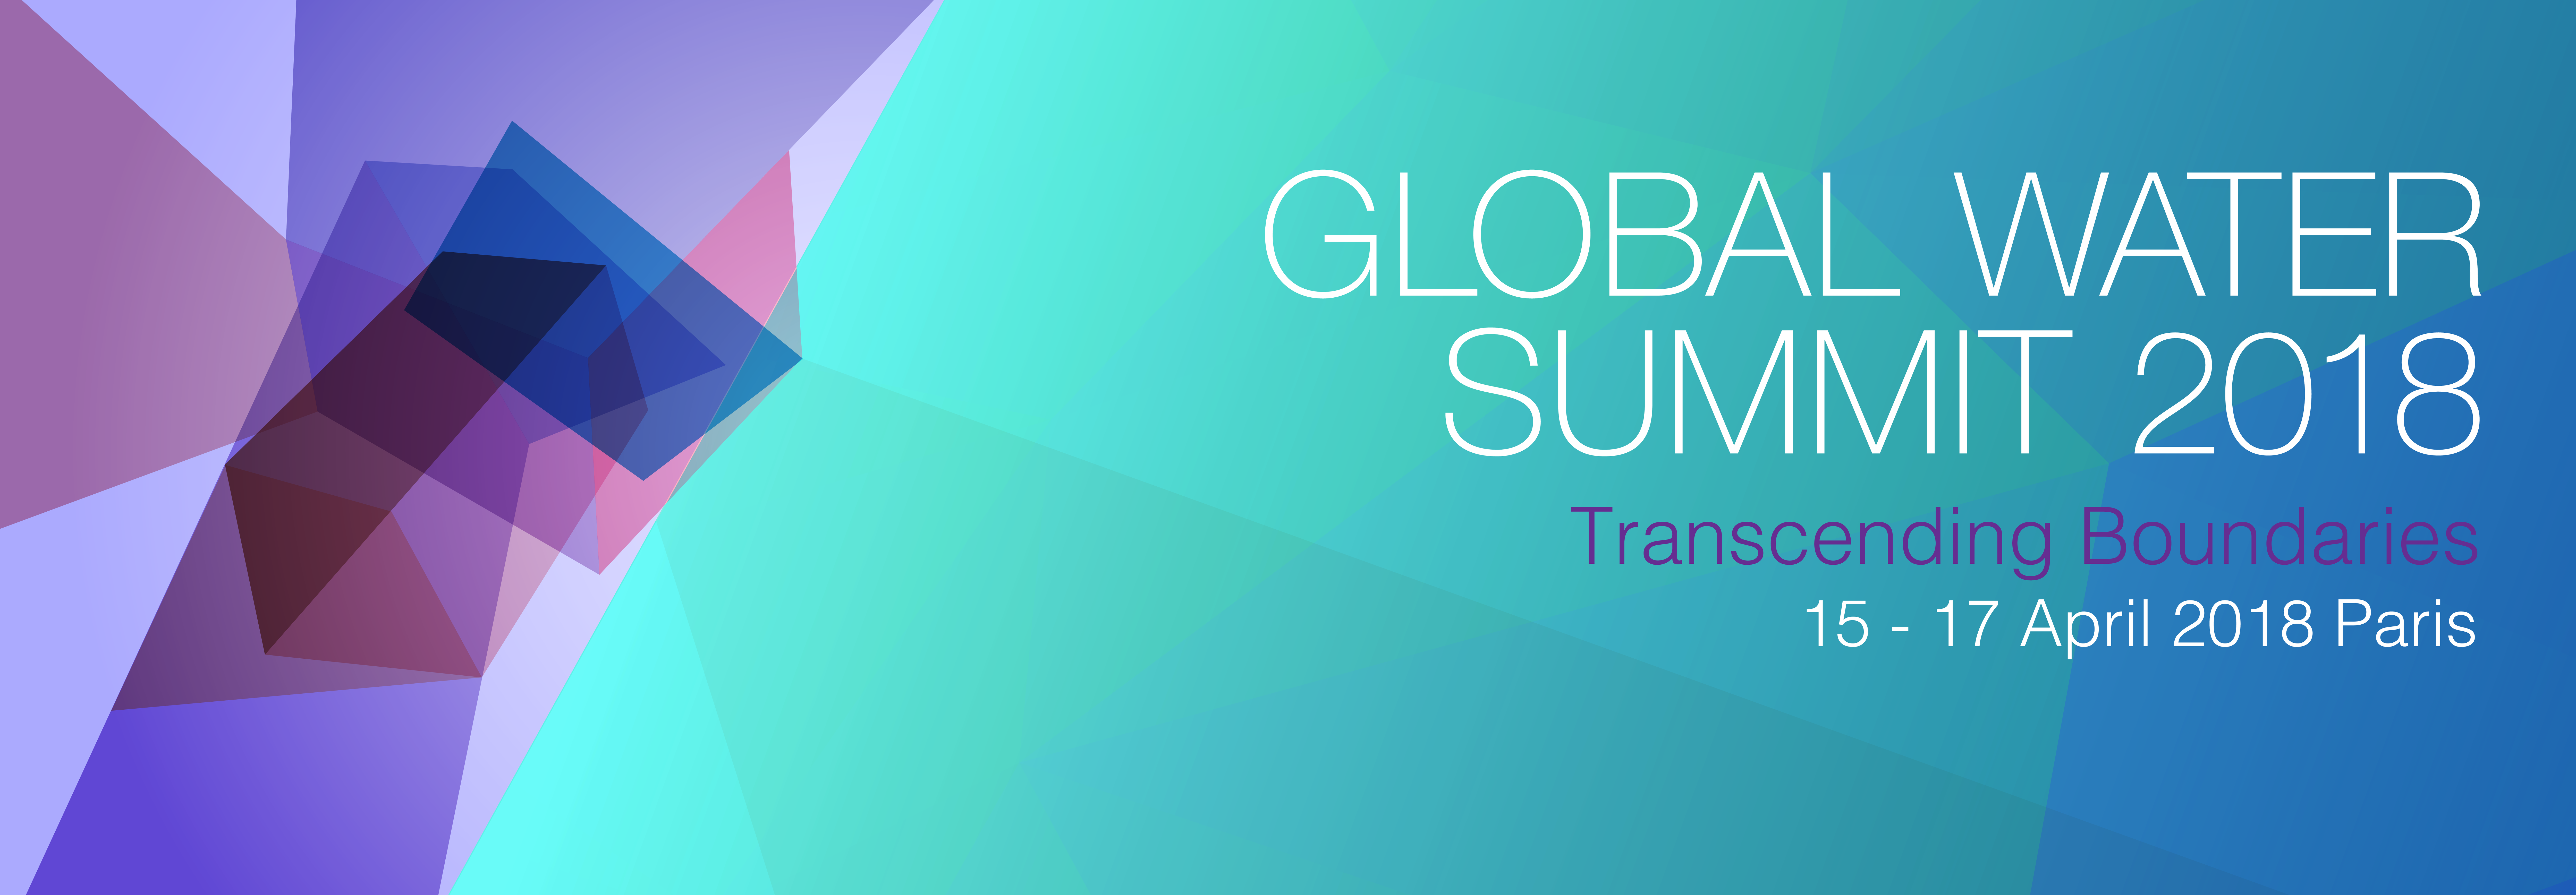 Global Water Summit 2018 Complete Banner Global Water Summit